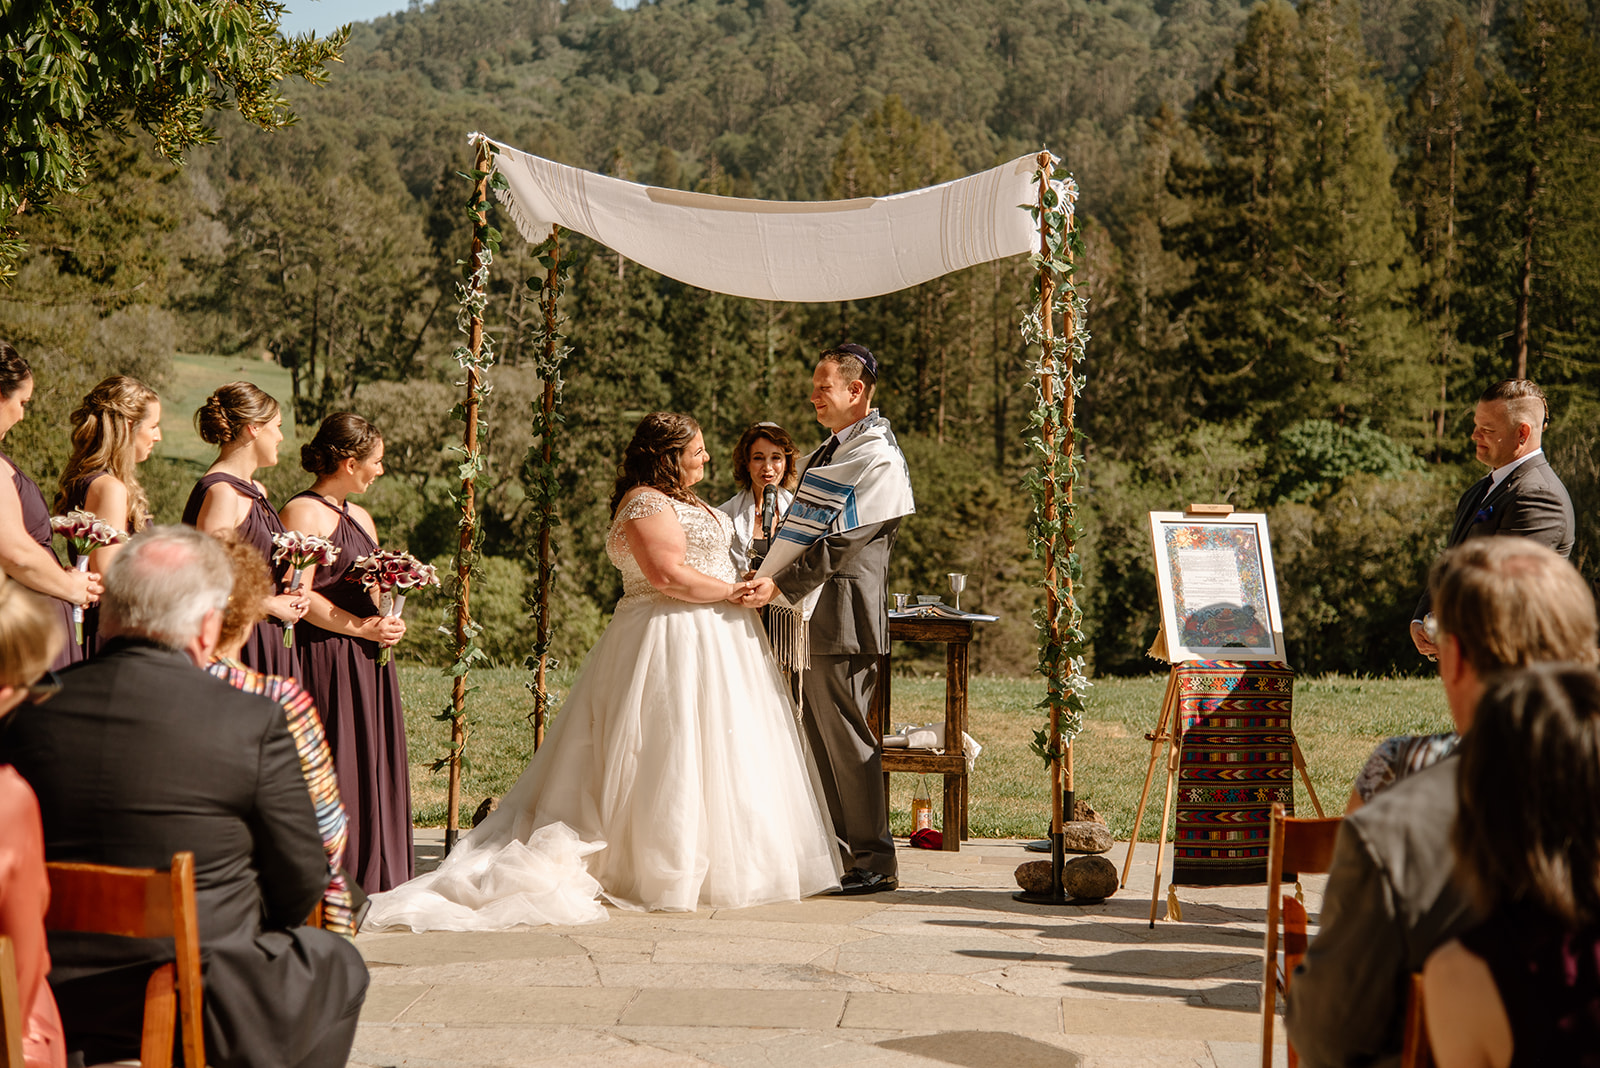 Sydney Jai Wedding Photographer - Bride and groom photos, Berkeley California wedding, wedding ceremony